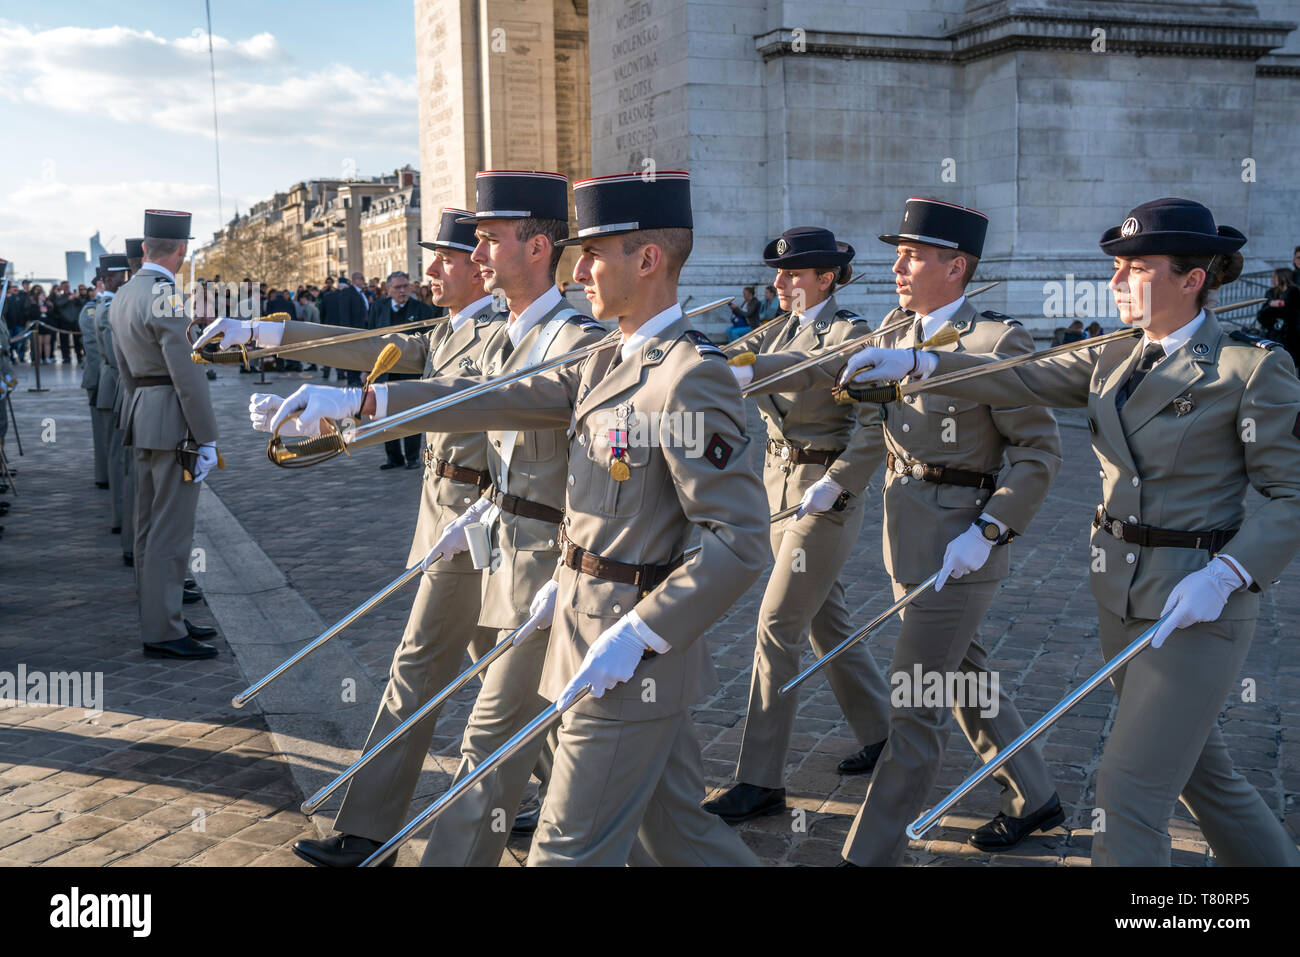 French Foreign Legion Legion Etrangere 5 rank Fremdenlegion,Sergent-Chef 